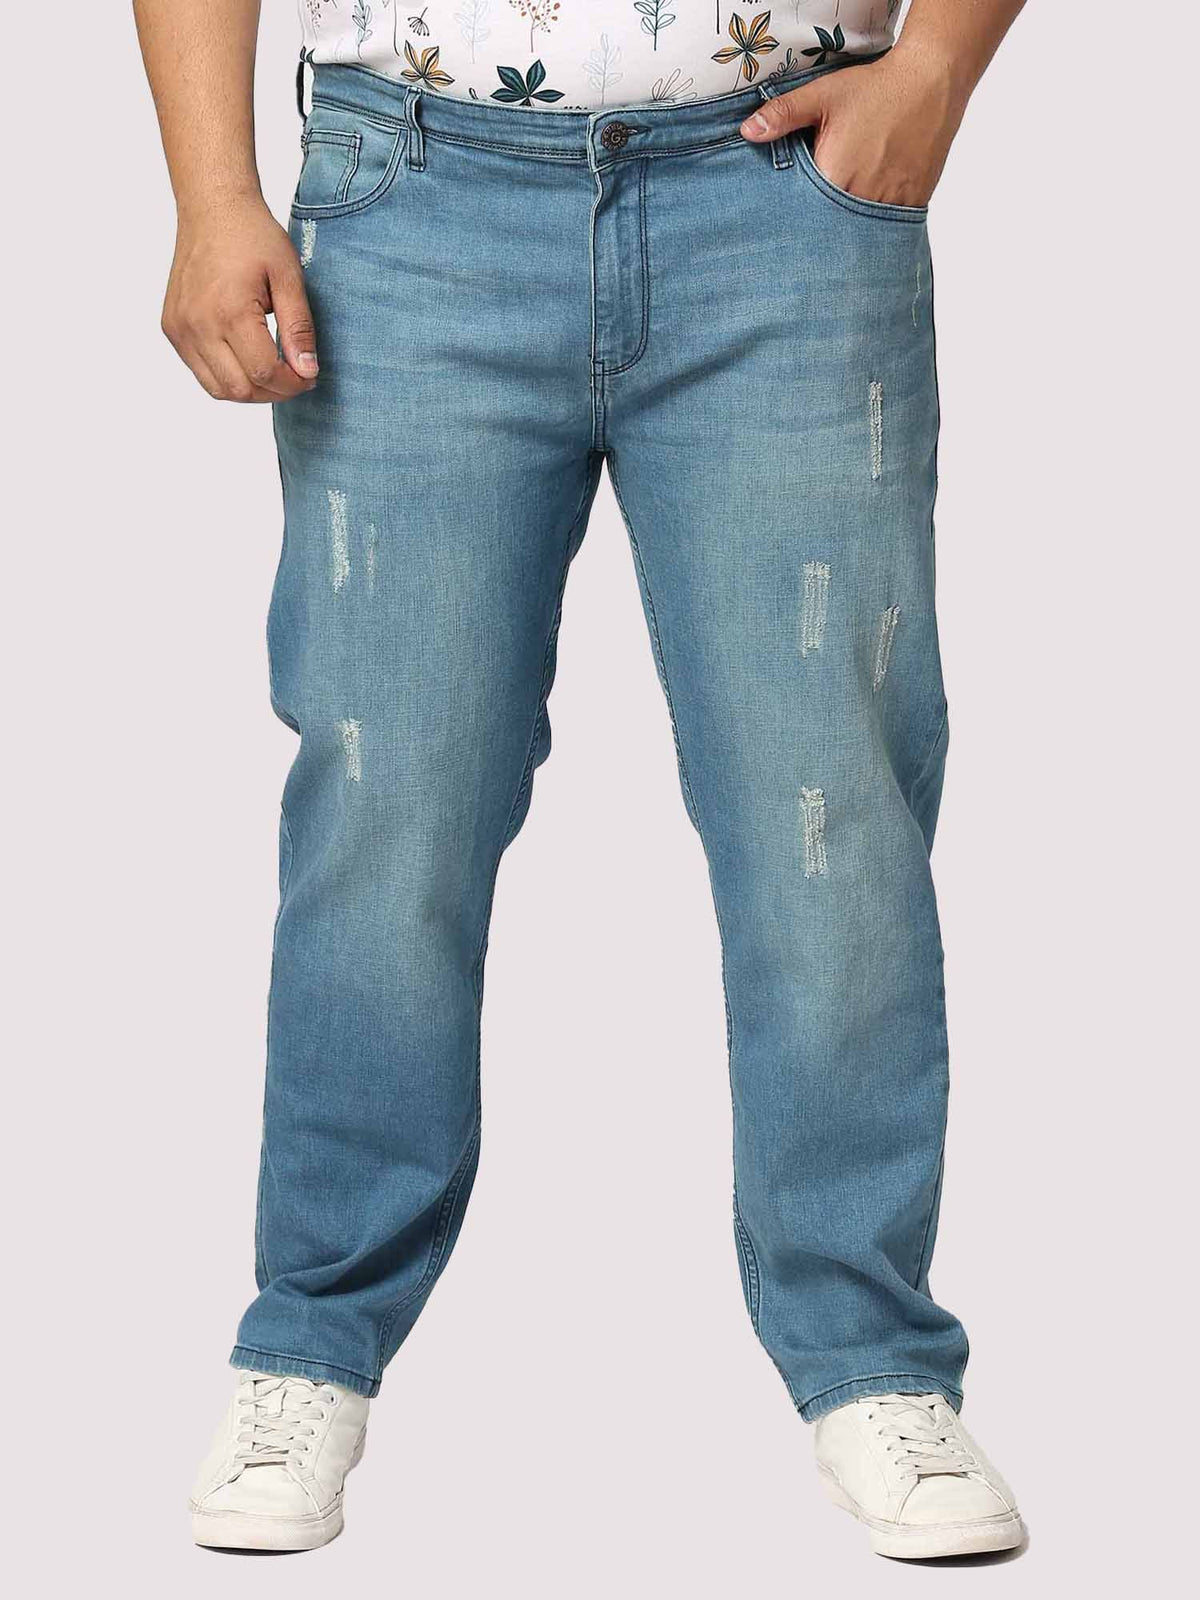 Blue Distressed Jeans Men's Plus Size - Guniaa Fashions